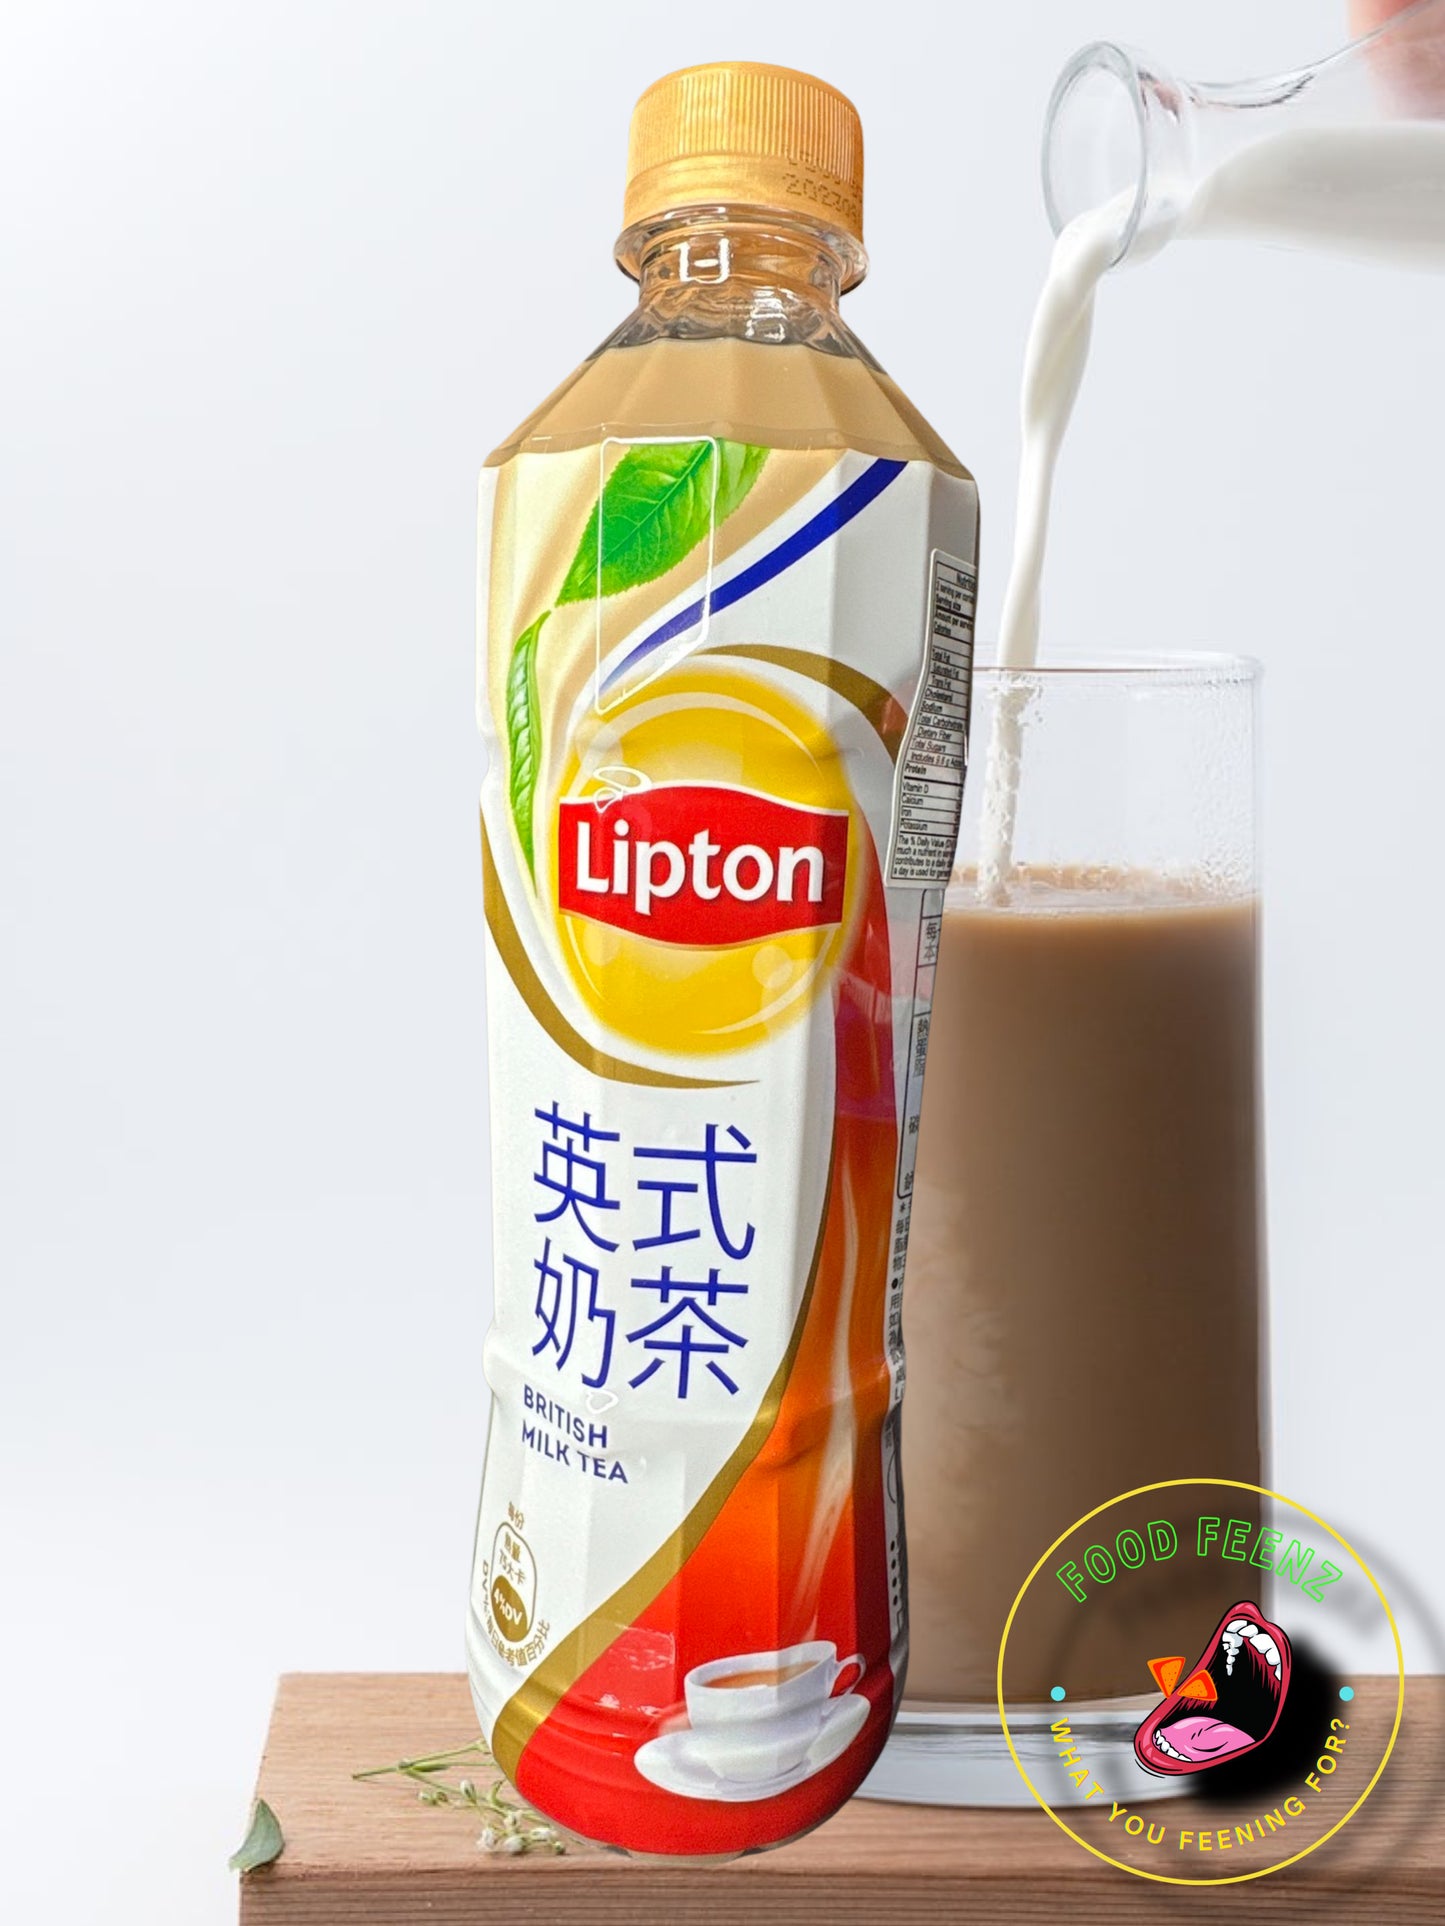 Lipton British Milk Tea (Taiwan)